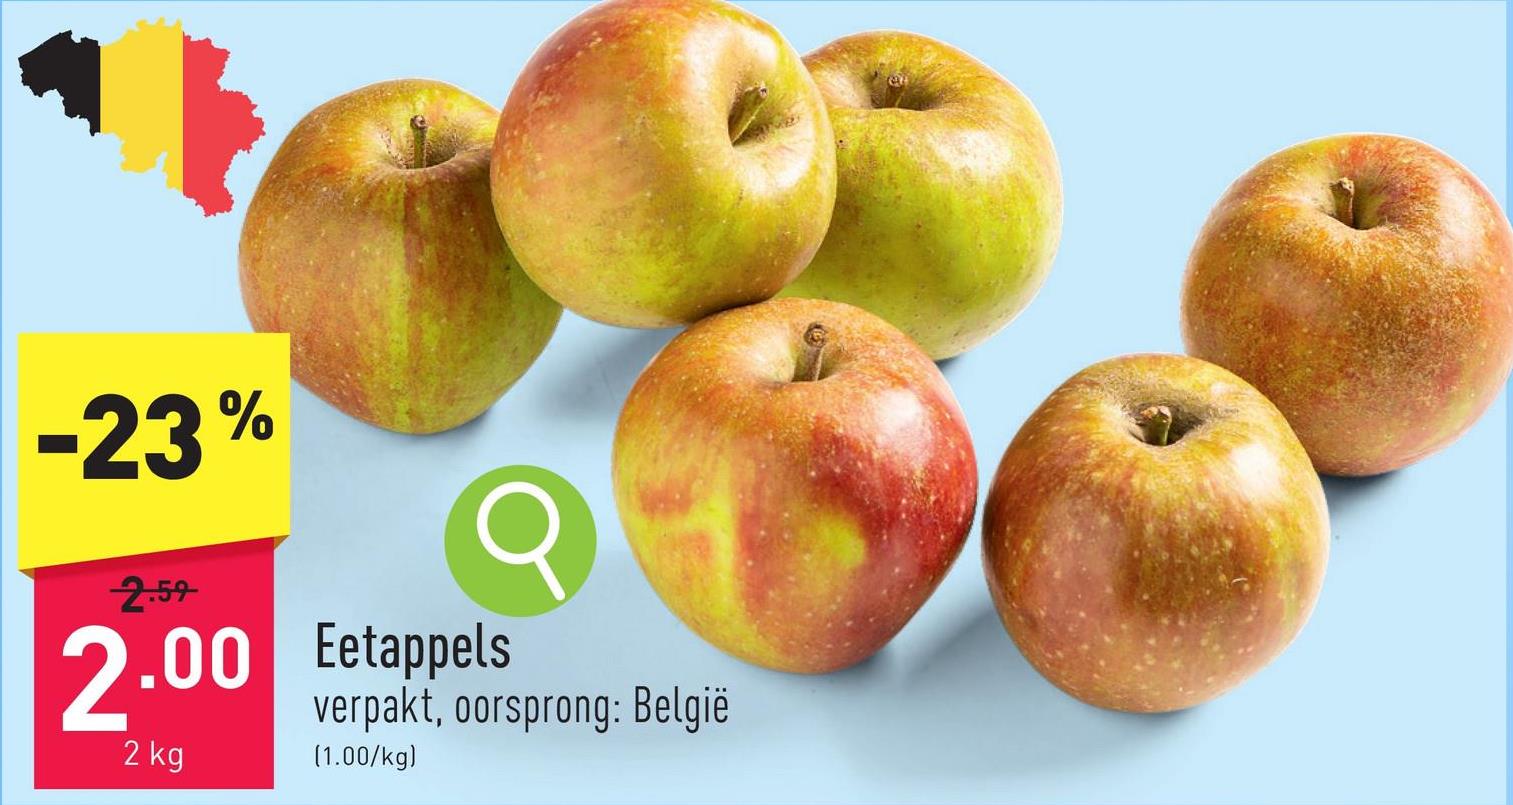 Eetappels verpakt, oorsprong: België